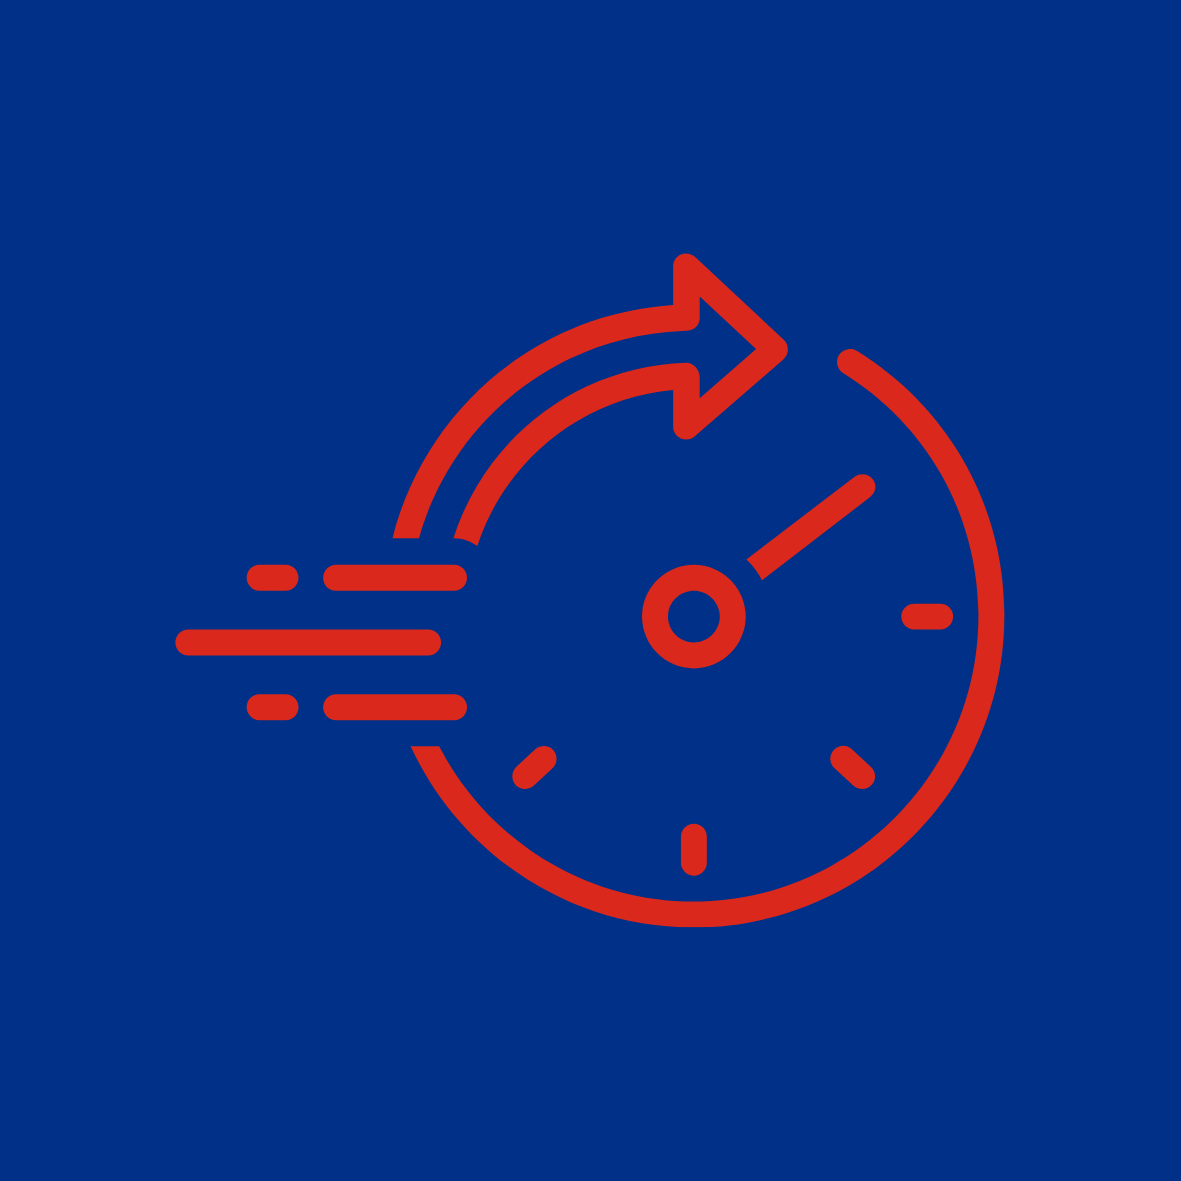 Clock Ticking Icon to Depict Urgent Care